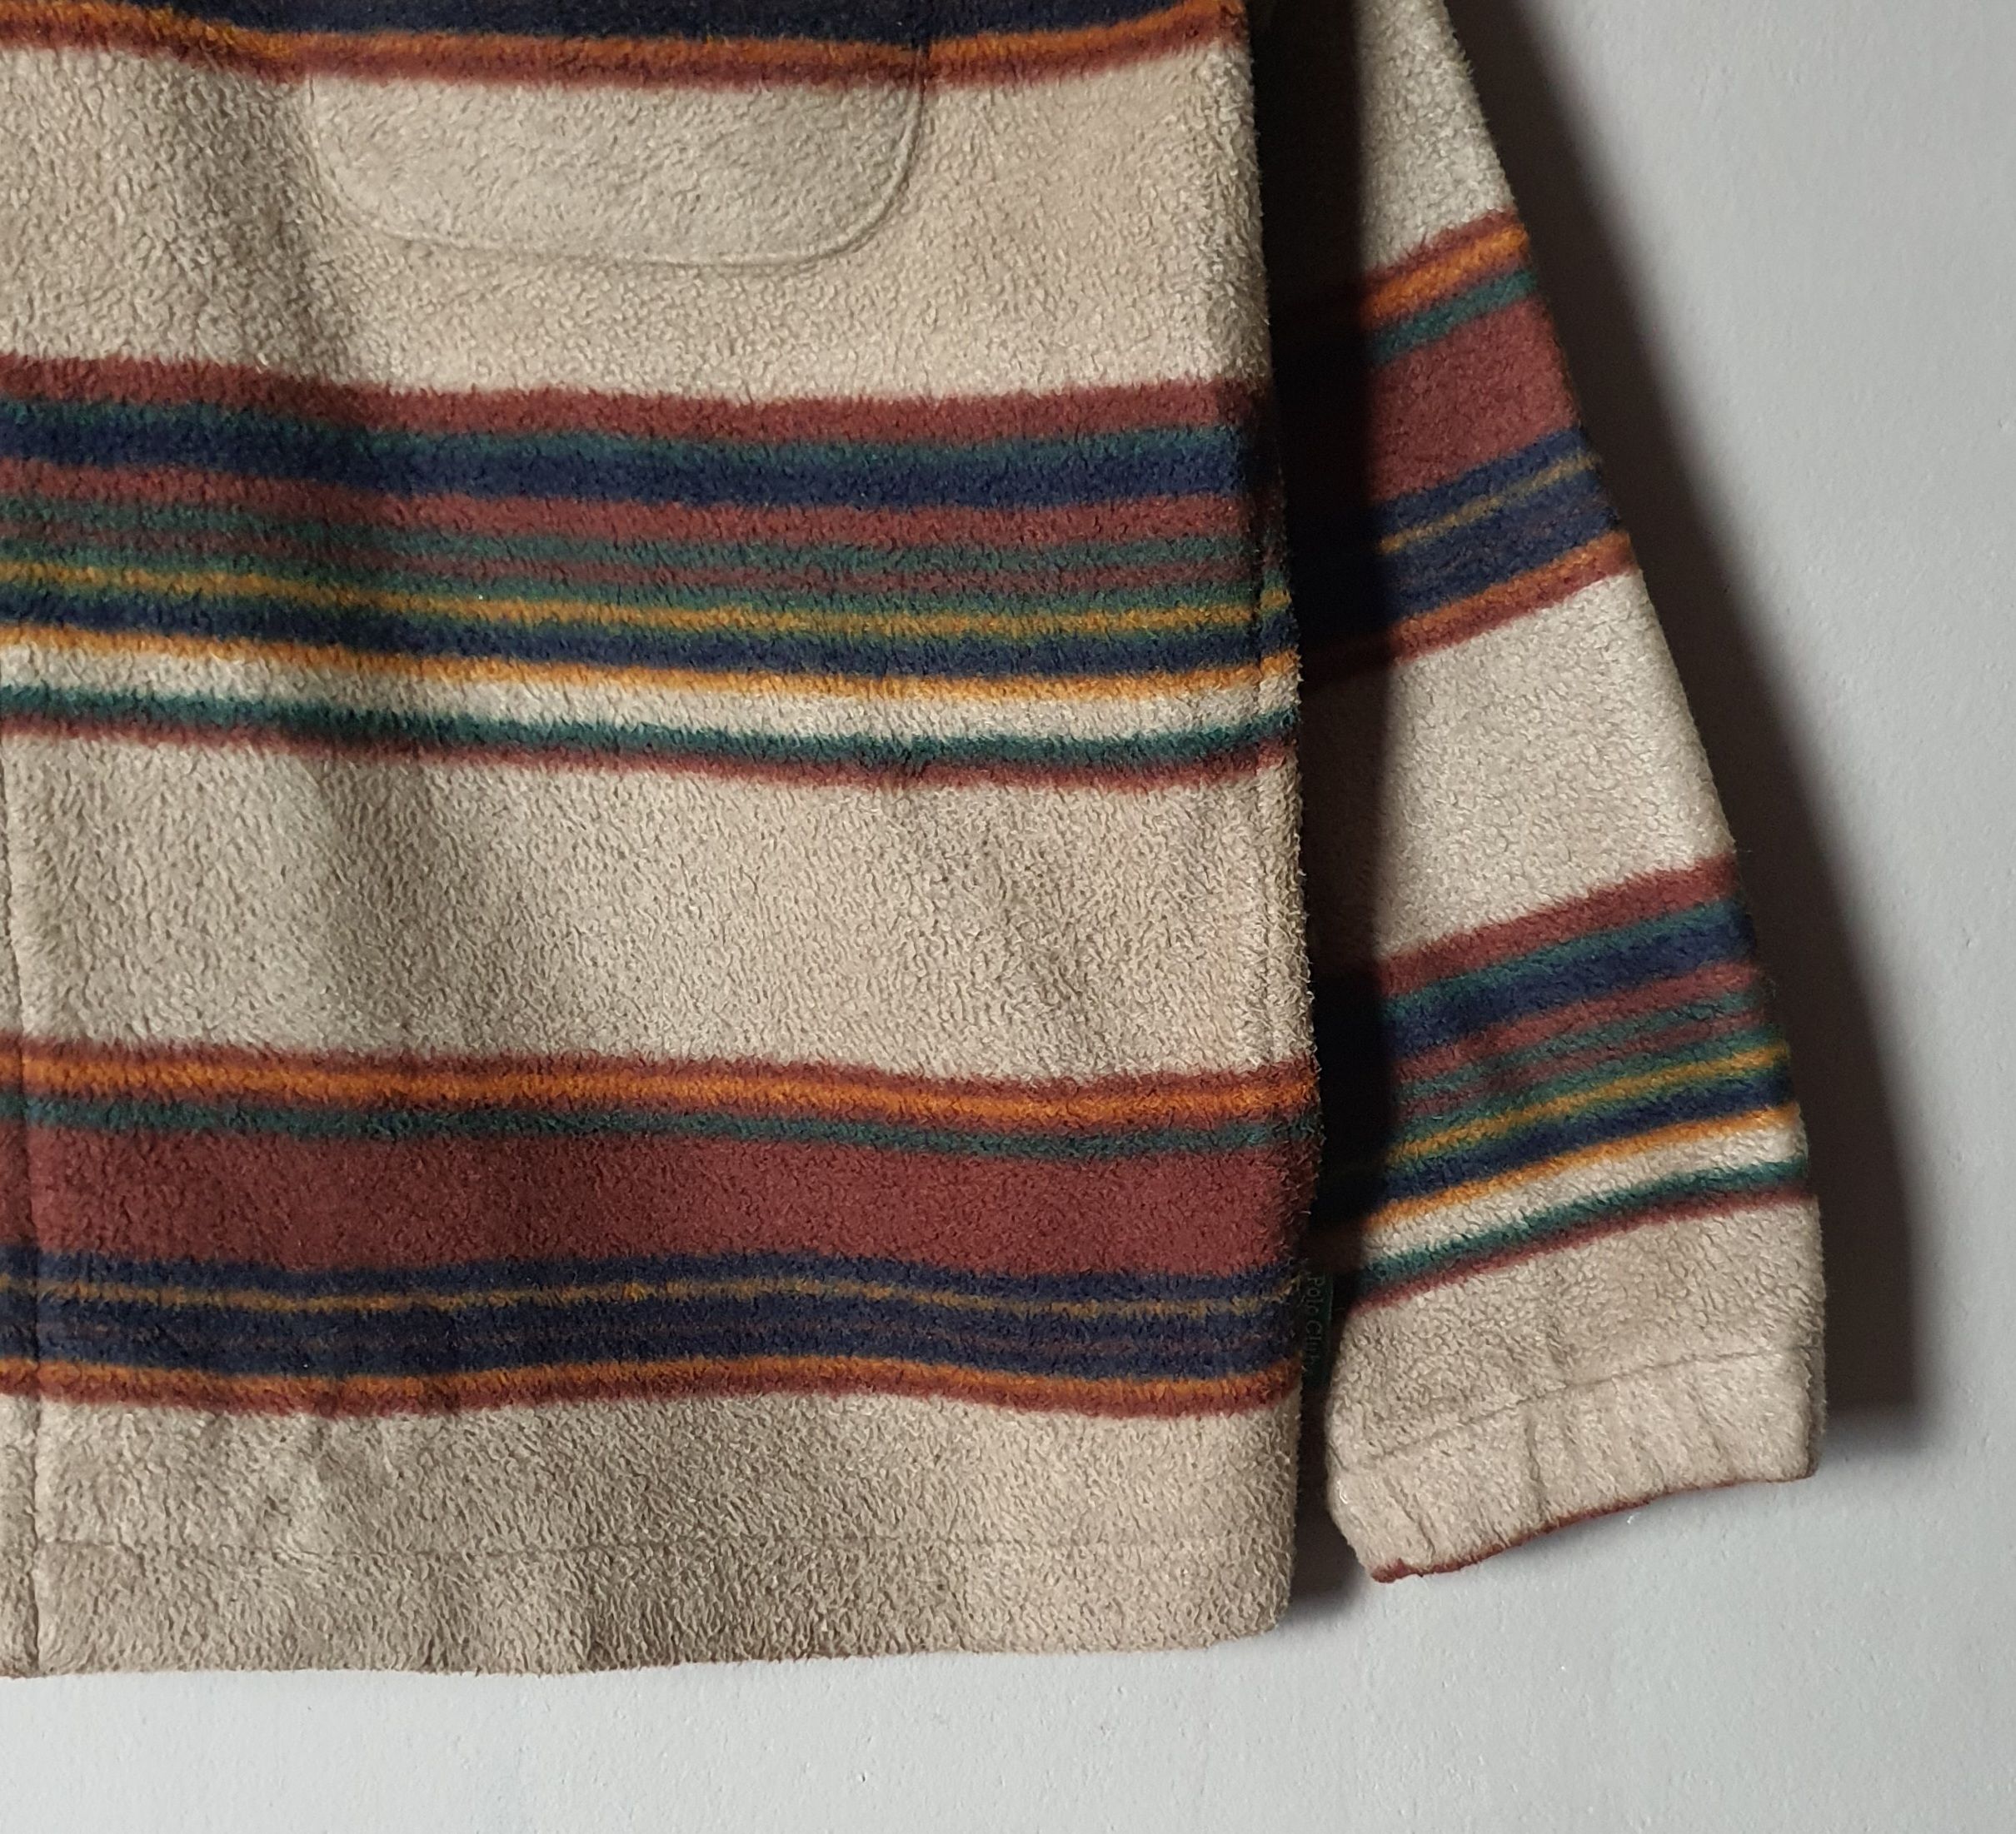 Vintage 90s Polo Club Fleece Zipper Striped Sweater Size Medium Size US M / EU 48-50 / 2 - 5 Thumbnail